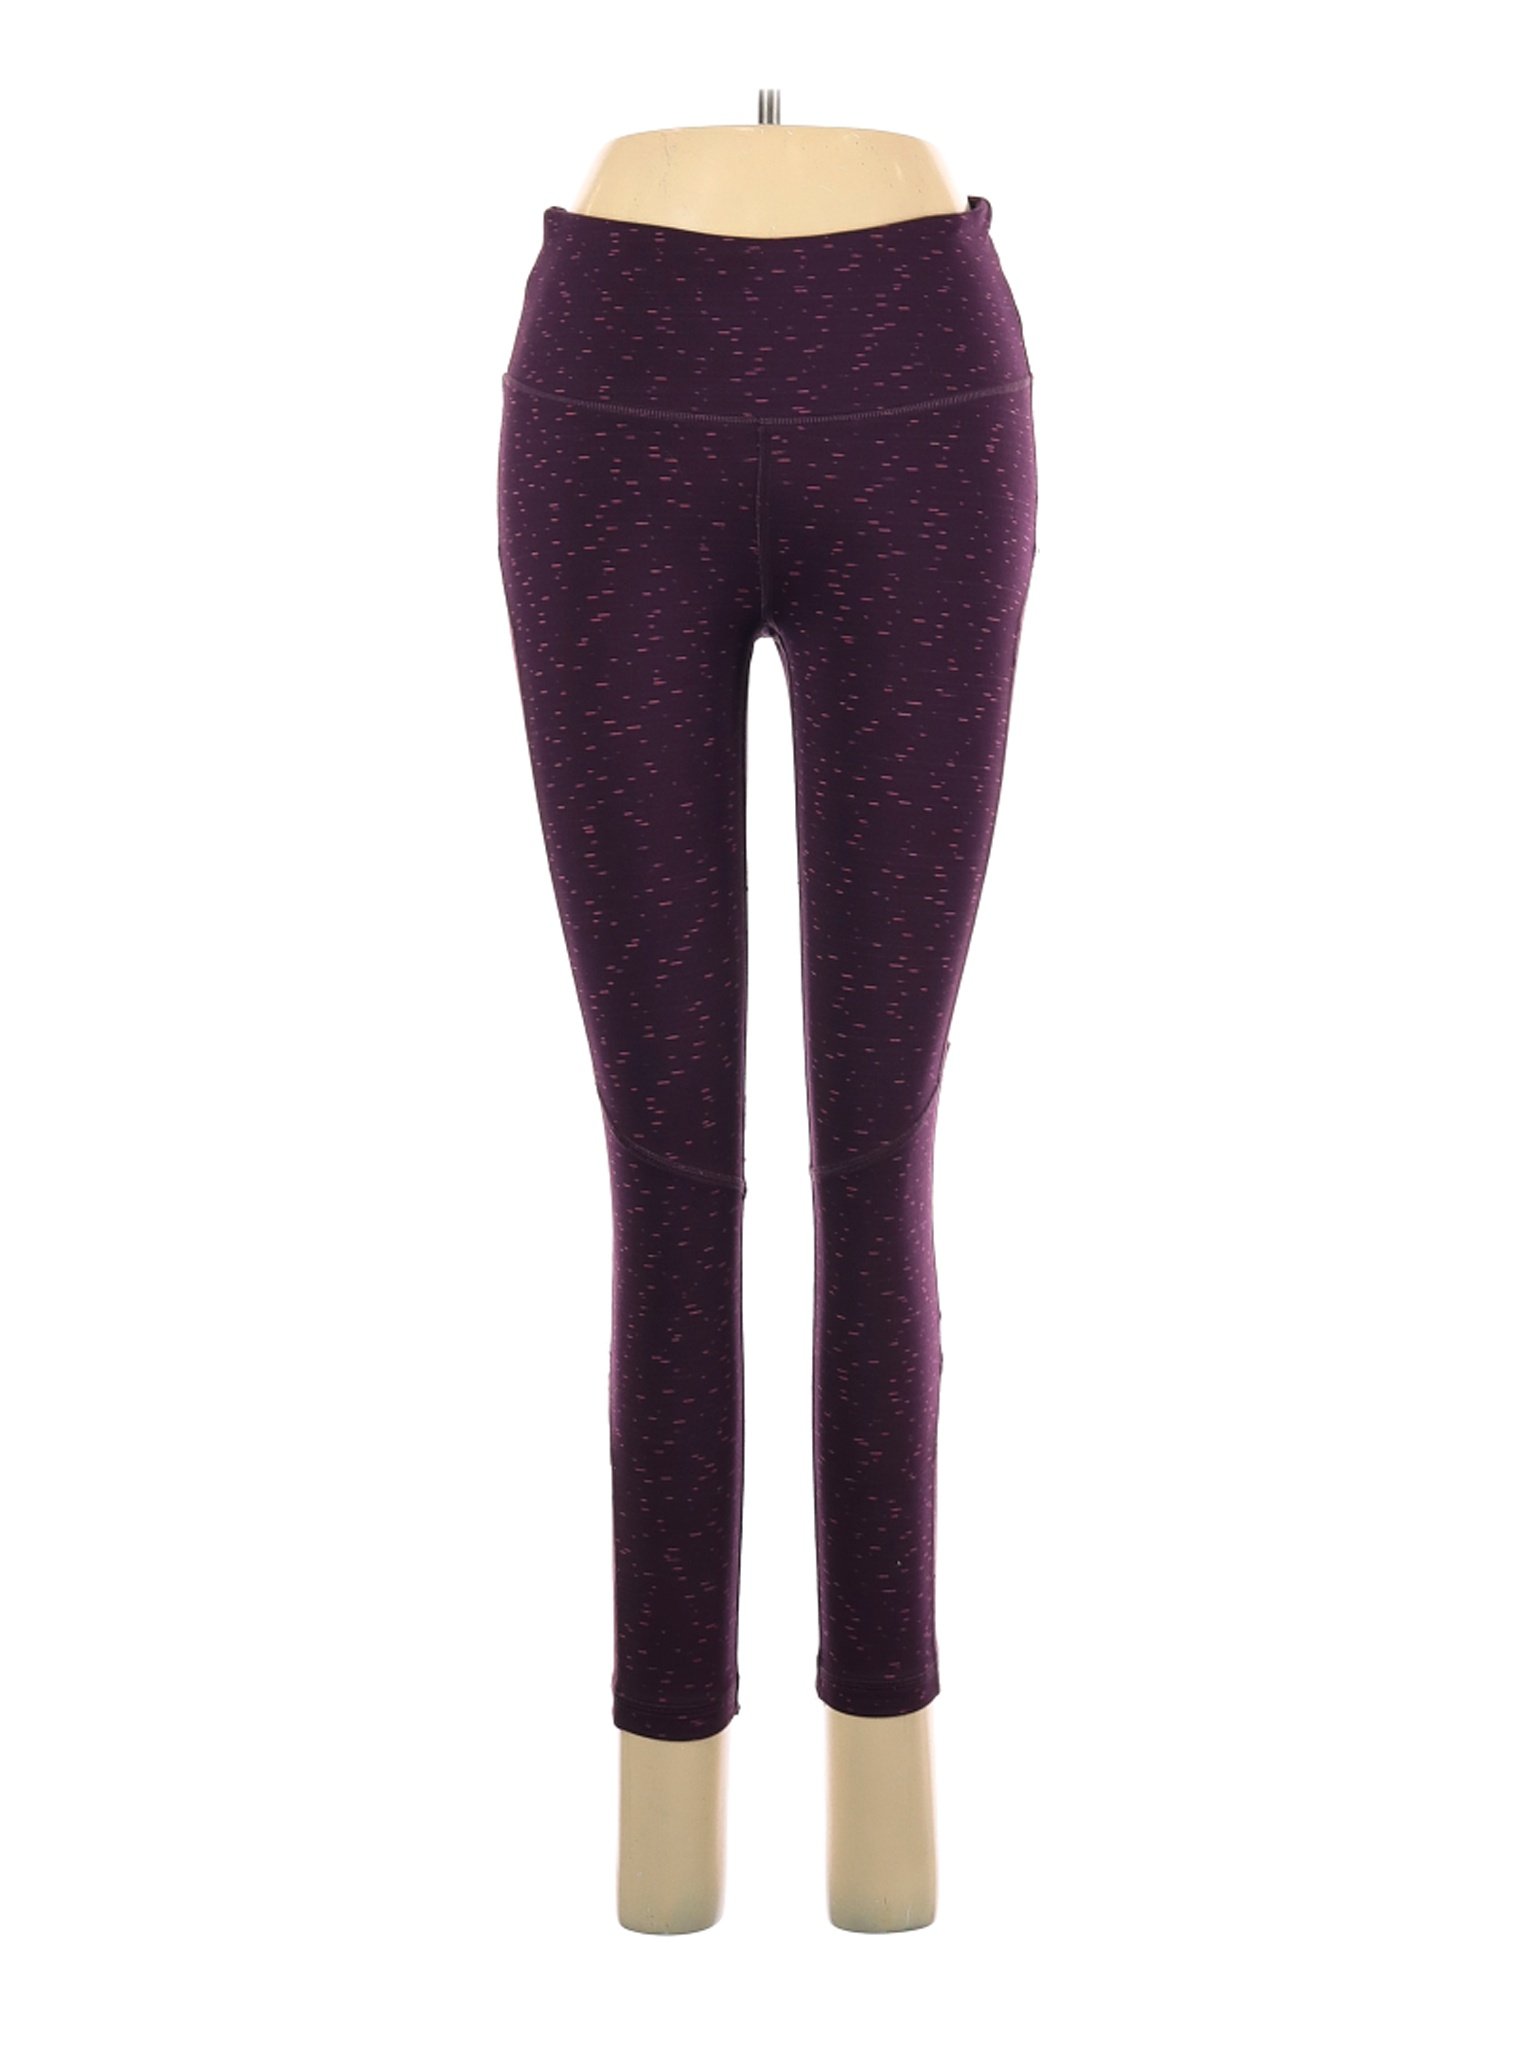 VSX Sport Women Purple Active Pants S | eBay